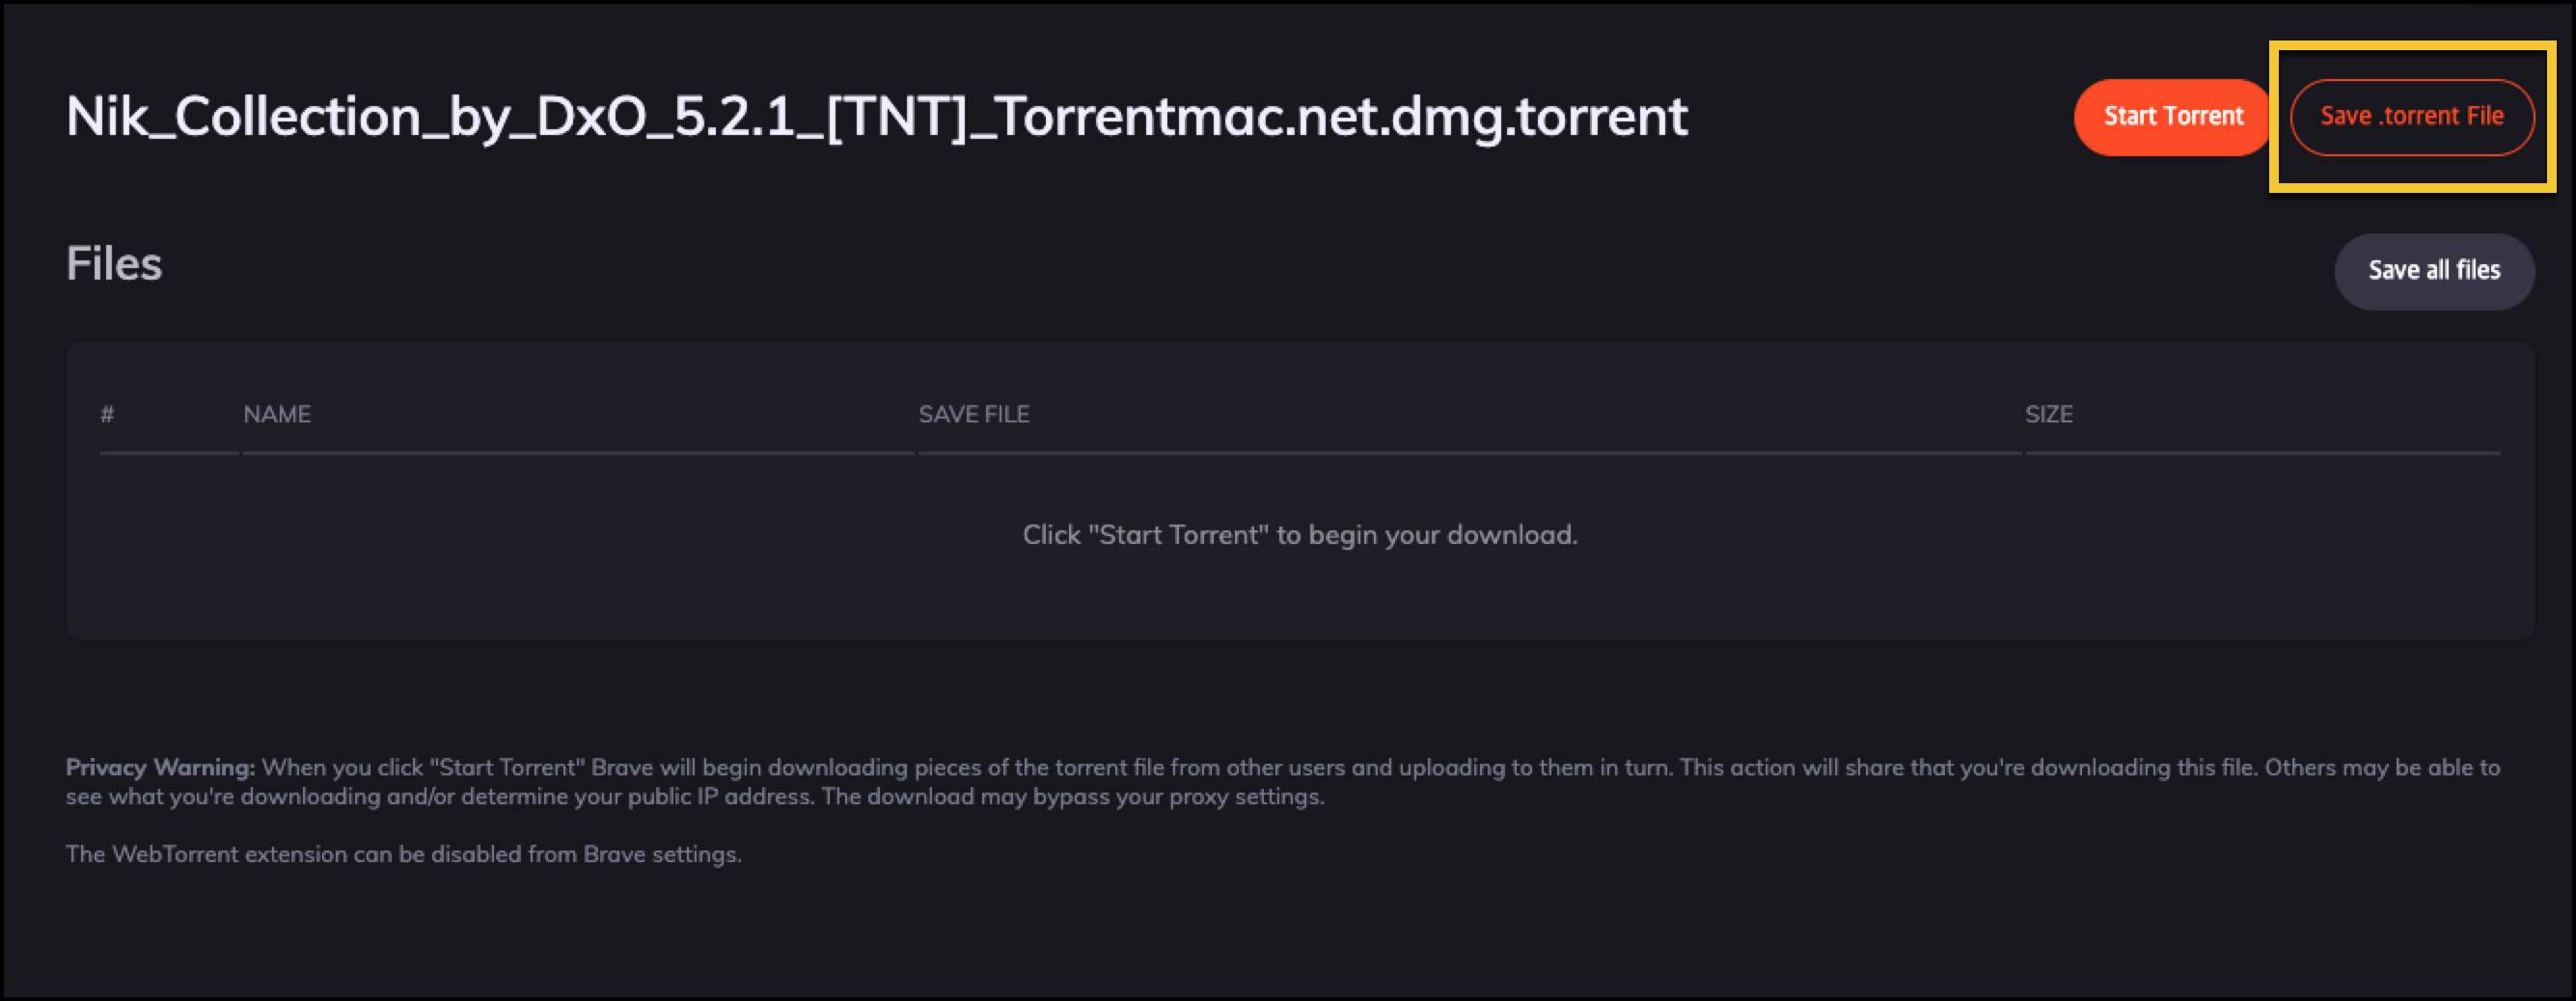 nik collection torrent